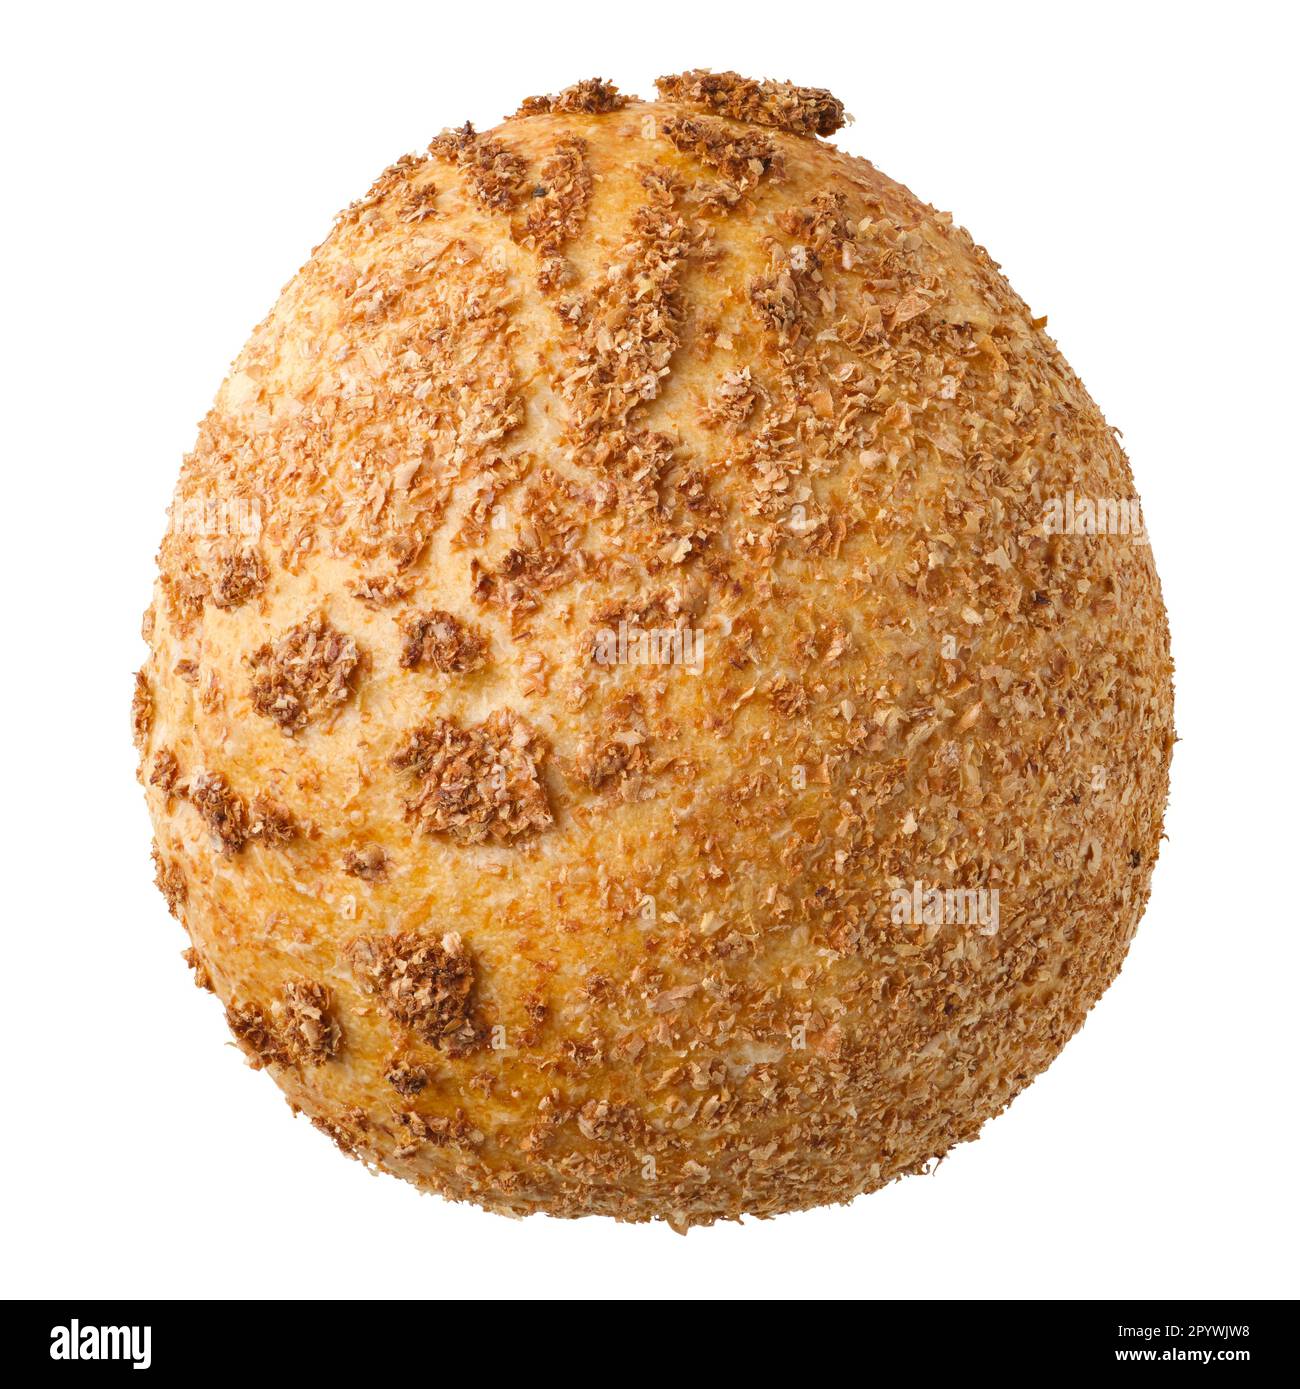 Pan de trigo de salvado redondo casero tradicional, aislado sobre fondo blanco Foto de stock